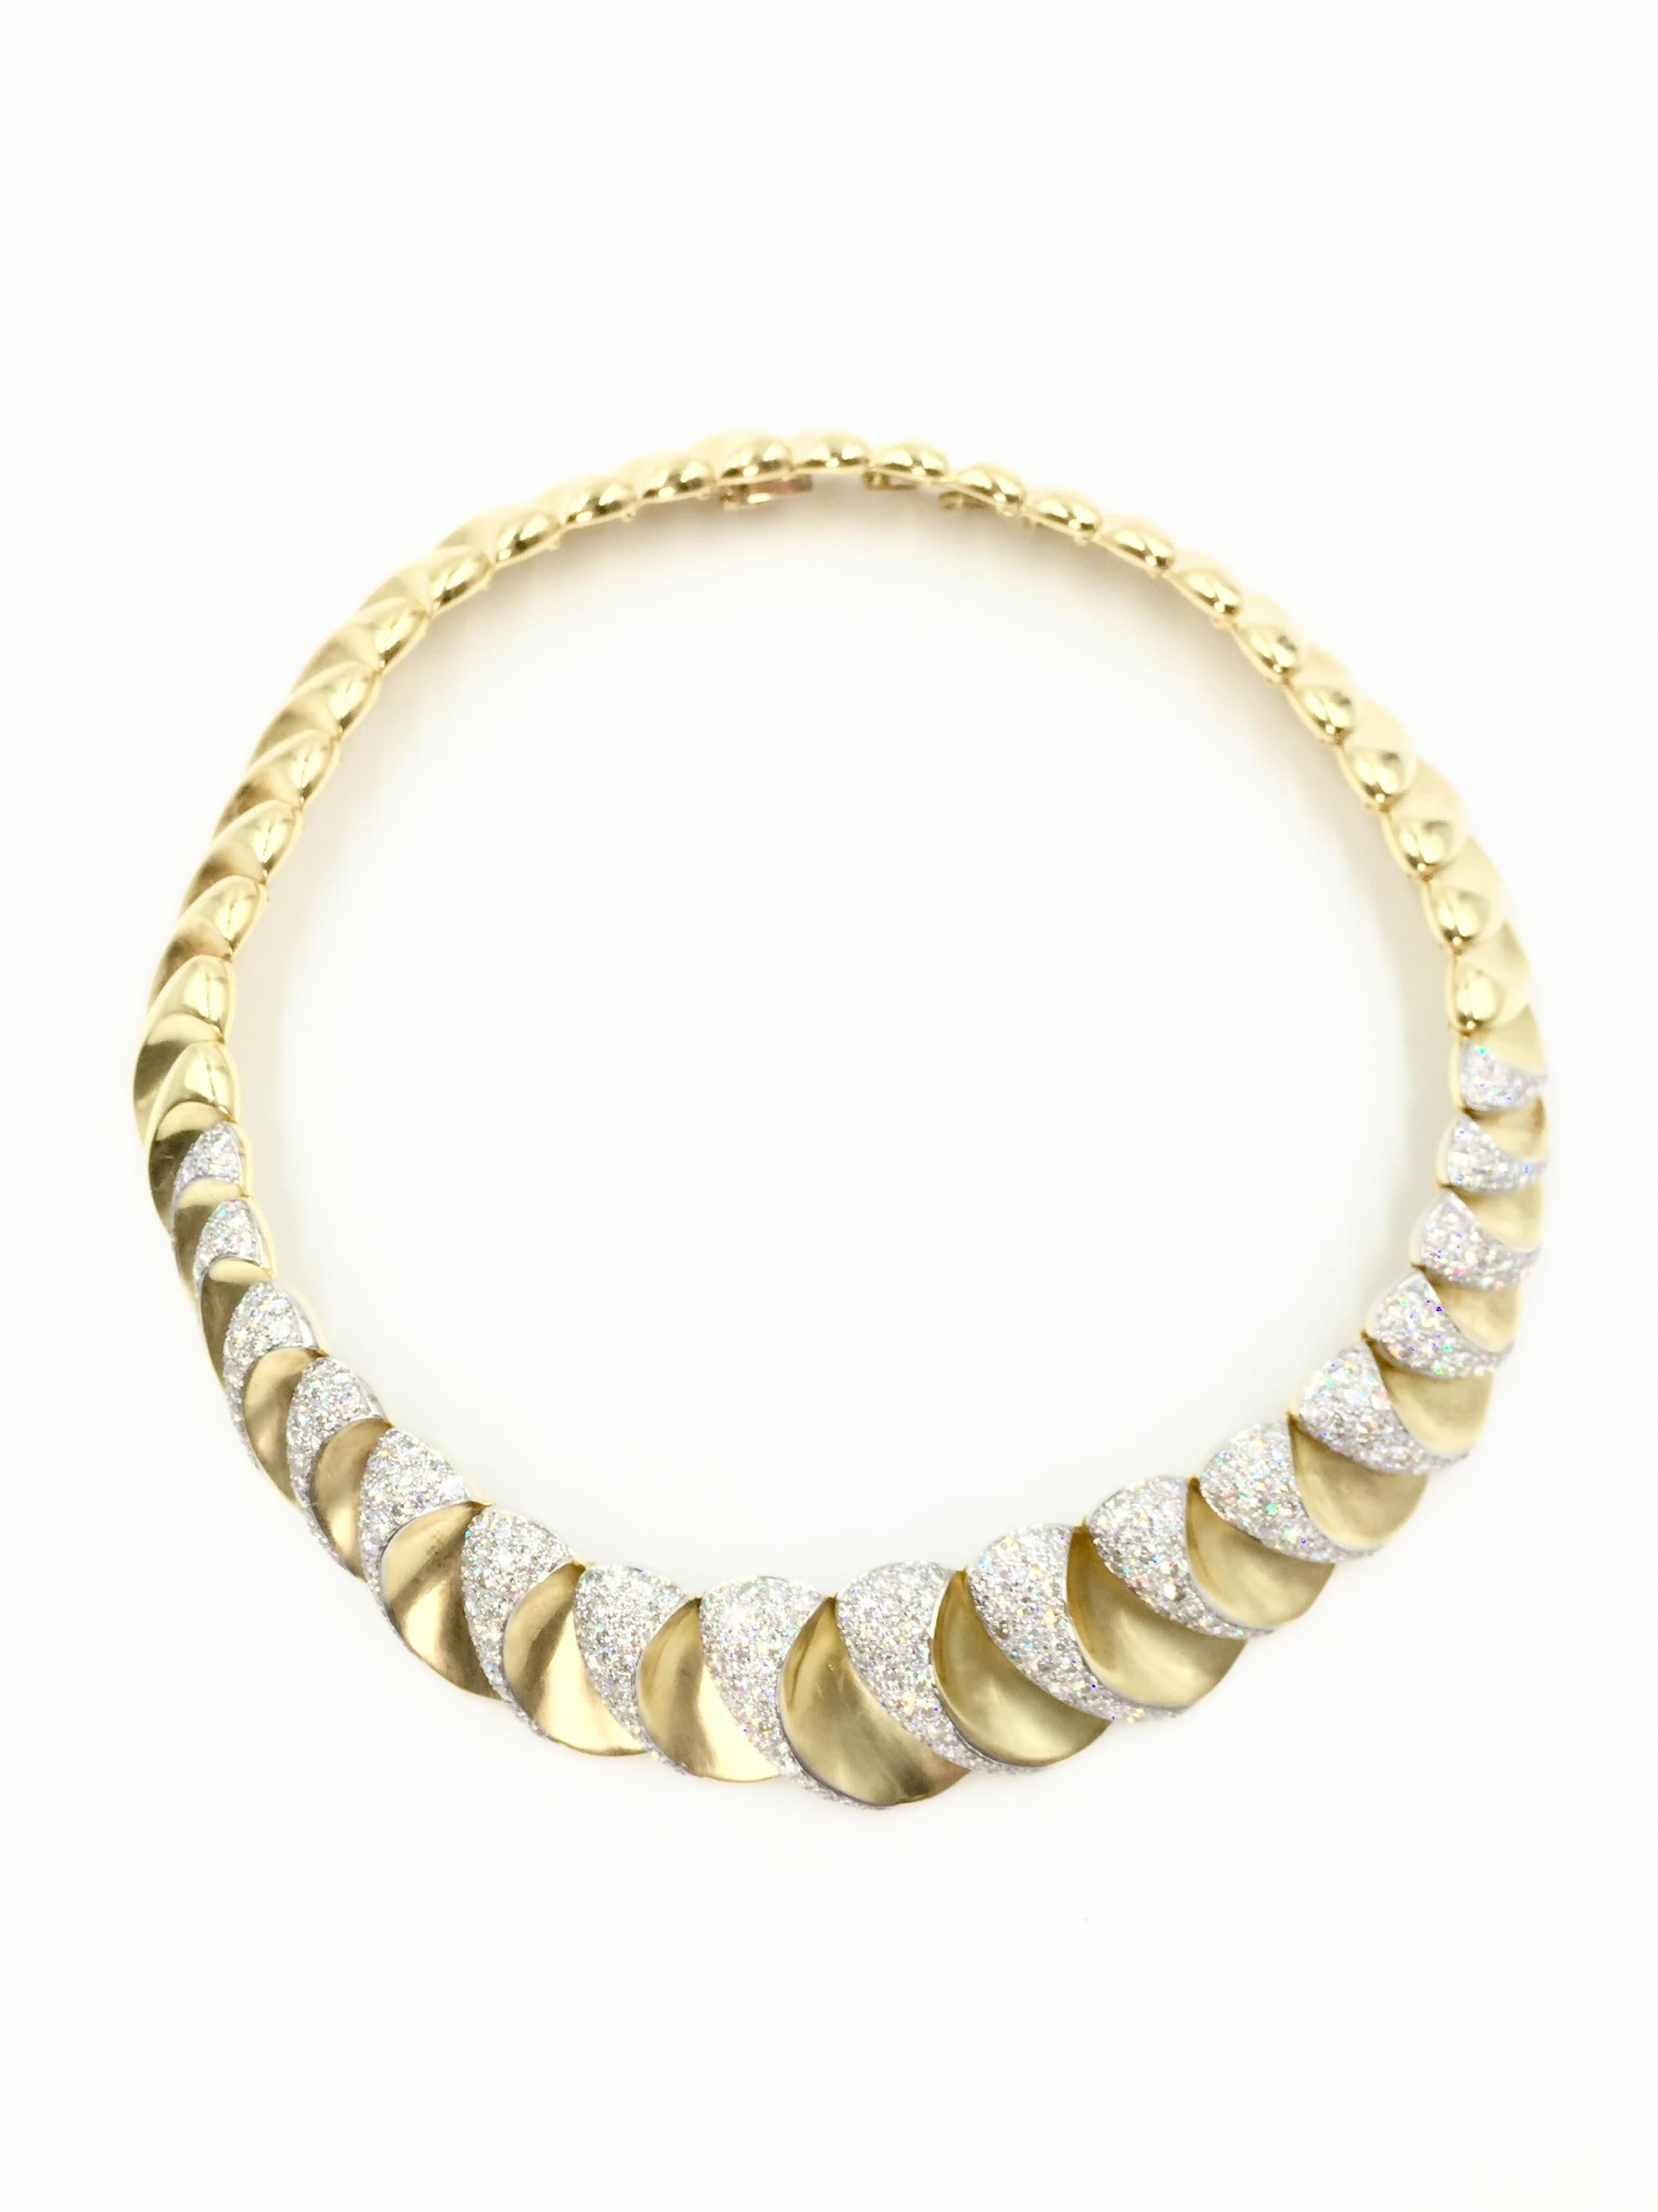 Contemporary Charles Turi 18 Karat Scalloped Diamond Necklace  For Sale